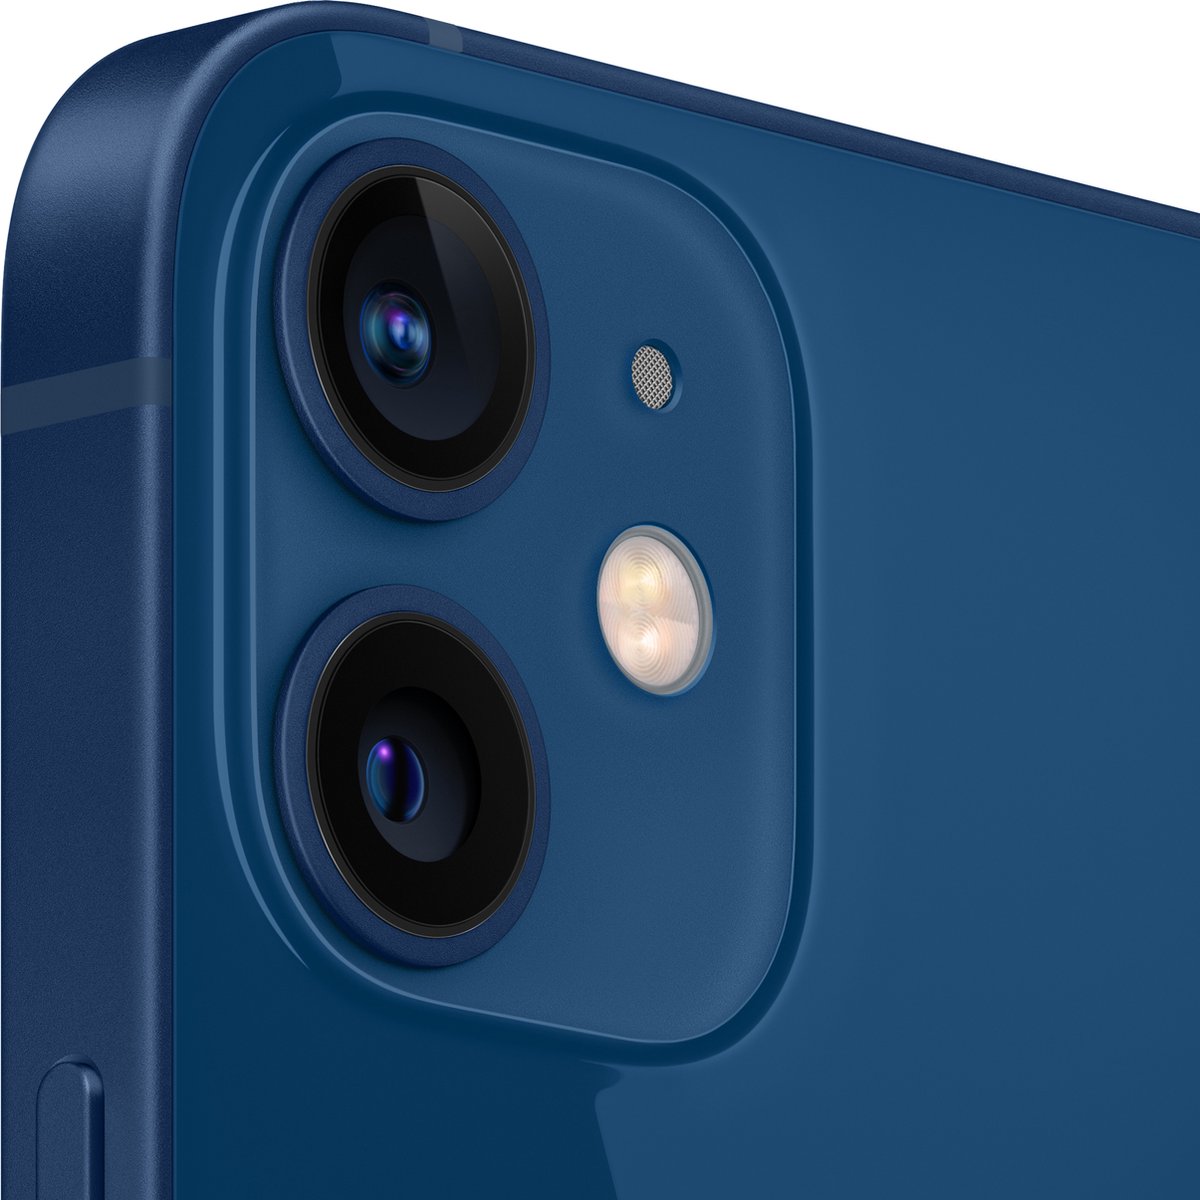 Apple iPhone 12 mini 256GB - Blauw